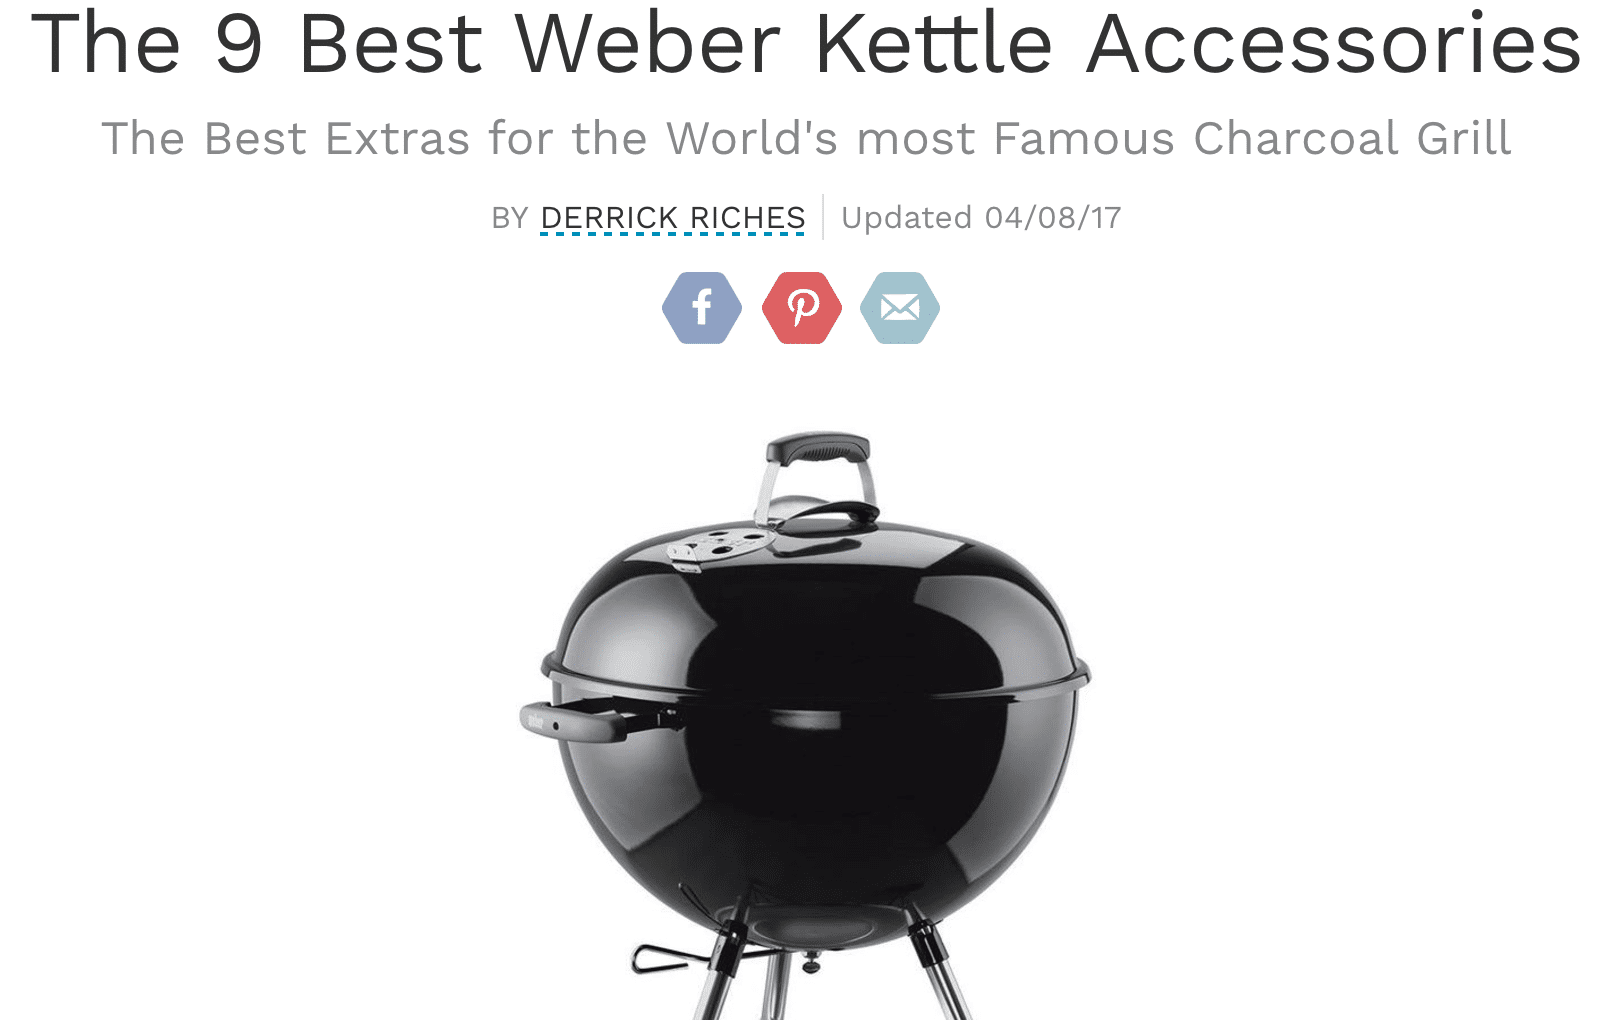 KettlePizza and Smokenator Make List of Top Nine Weber Kettle Accessories!